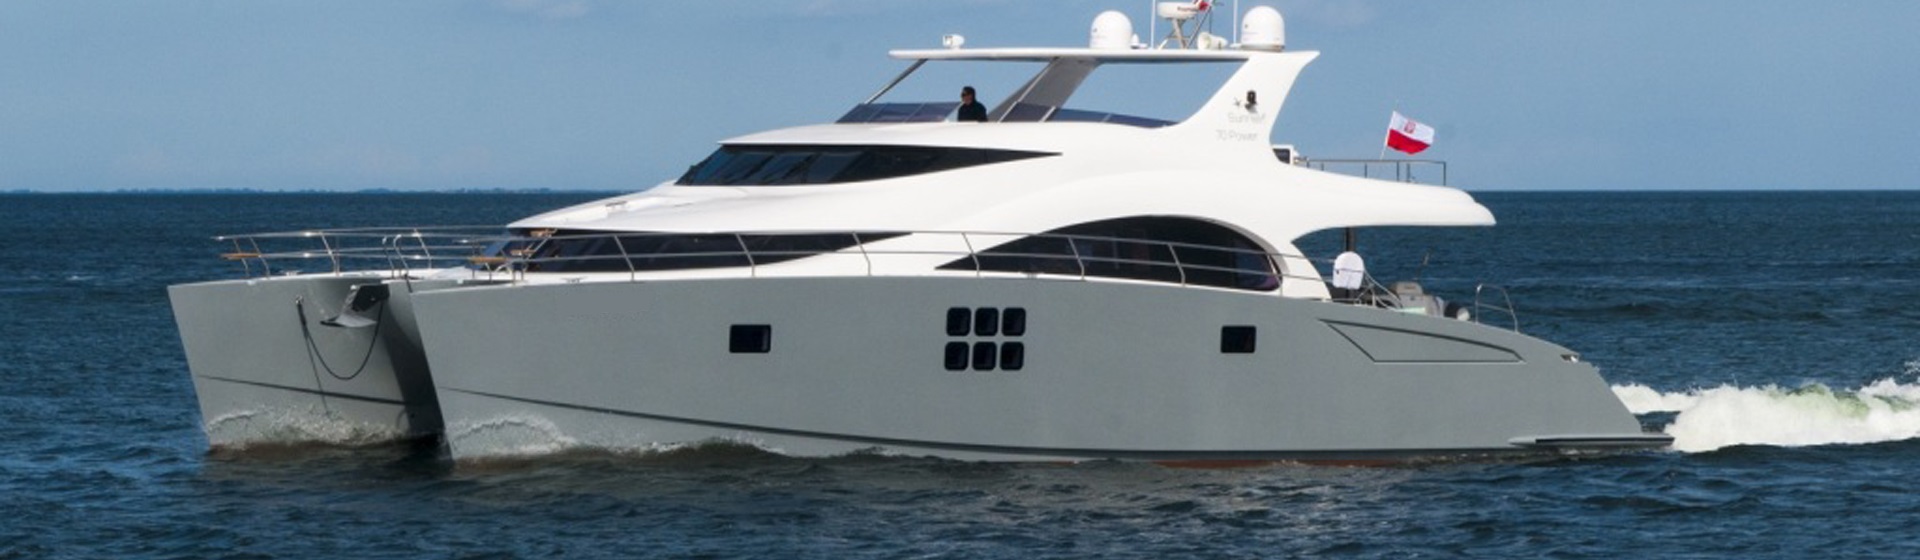 Luxury Power Catamaran Charter West Mediterranean Sea Sunreef 70 power